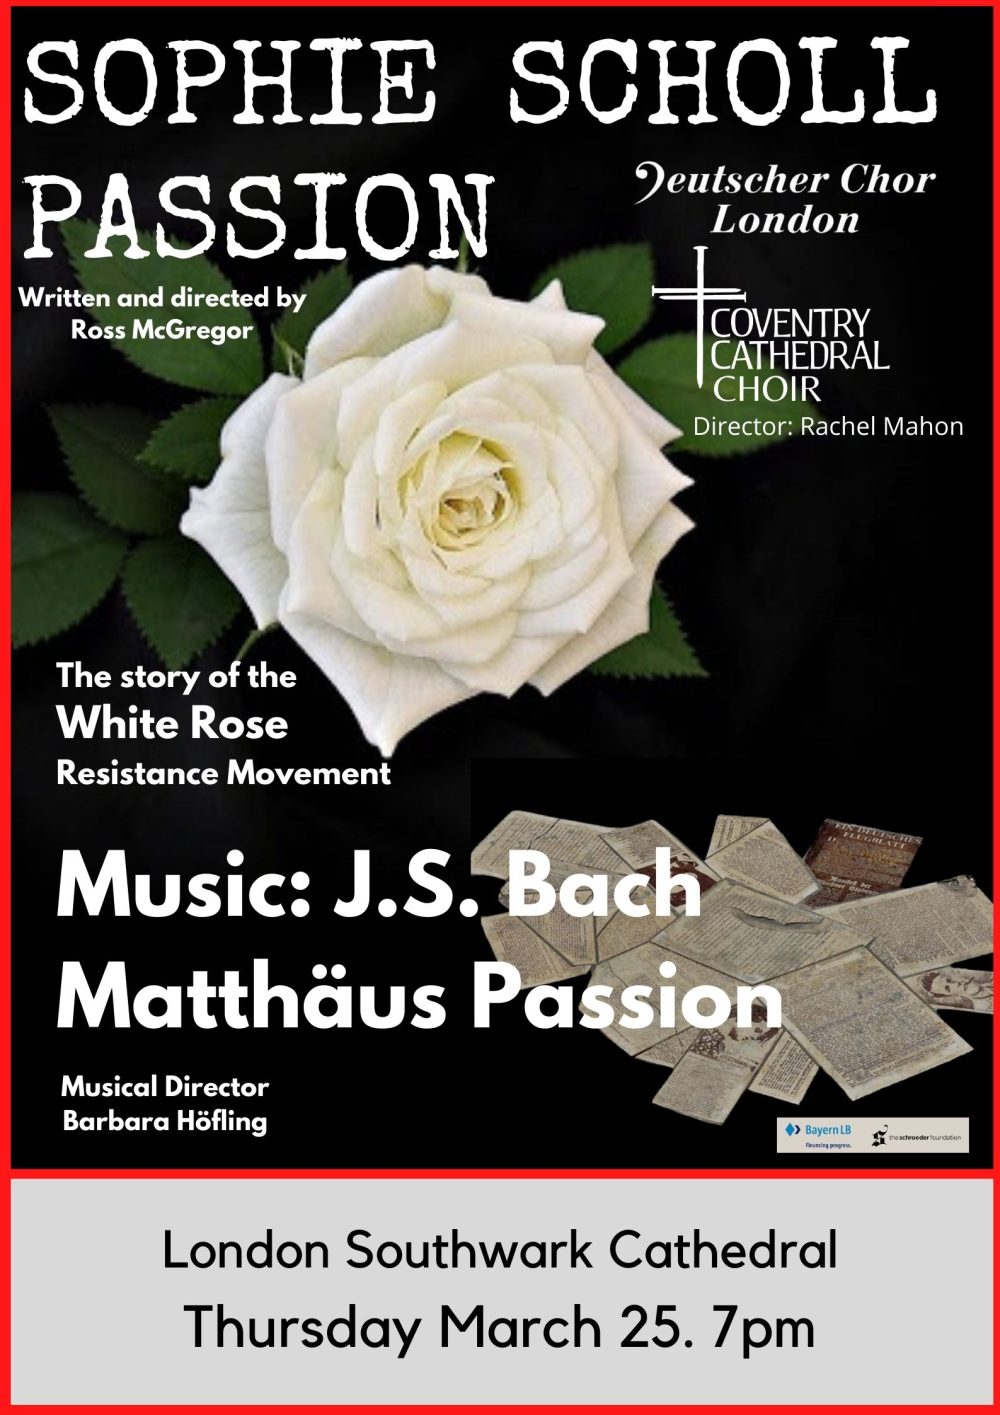 Sophie Scholl Passion – St Matthew Passion